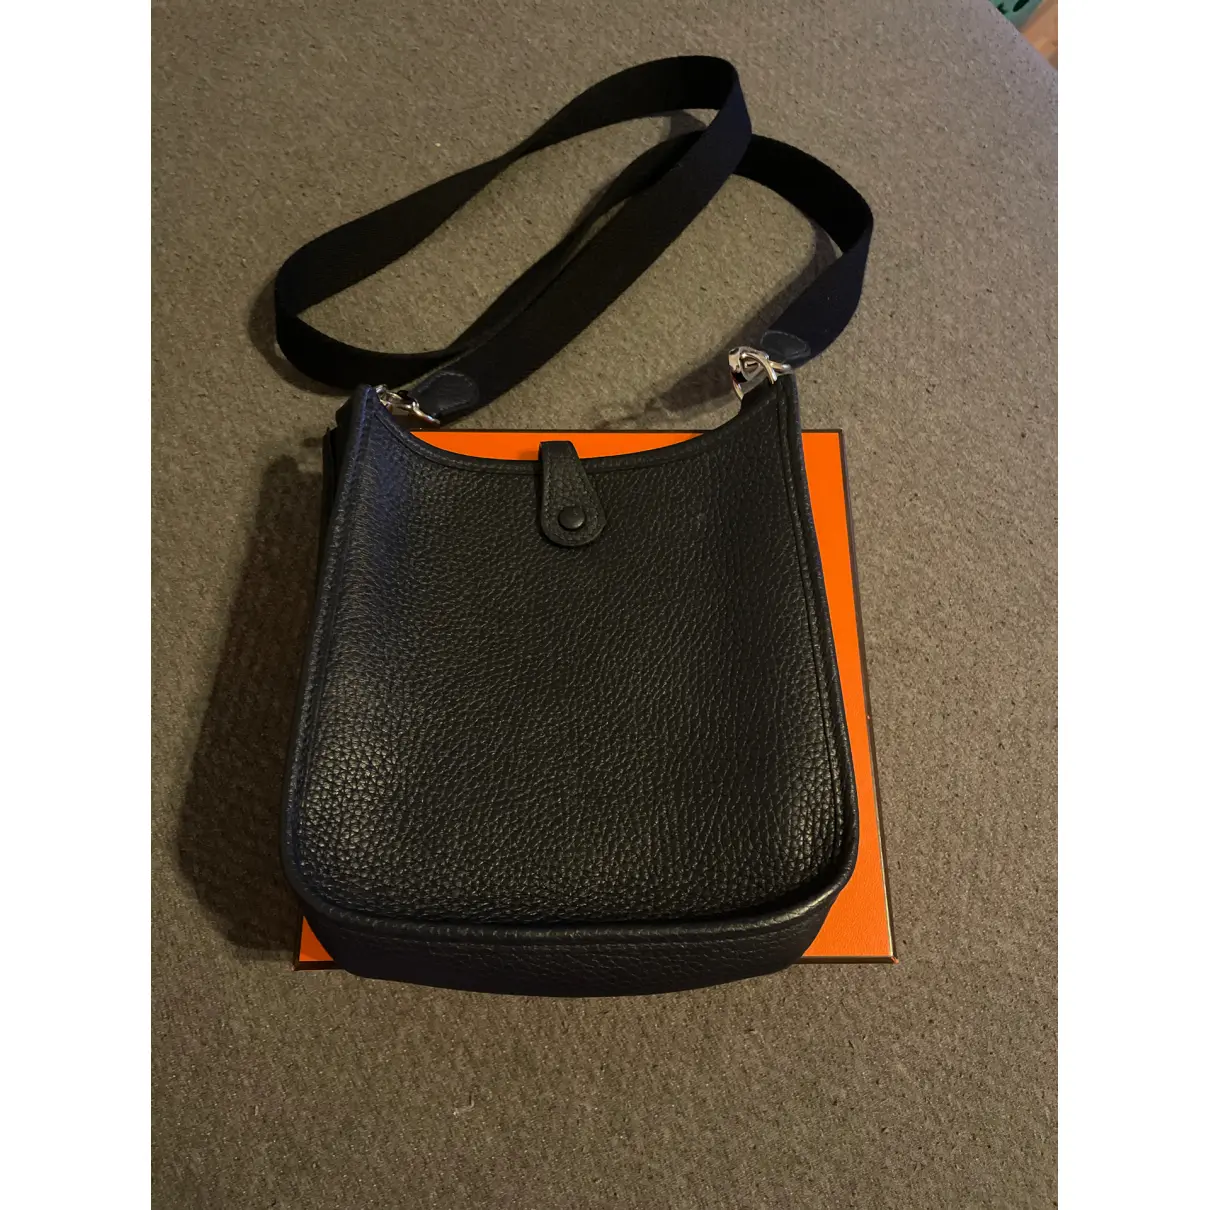 Buy Hermès Mini Evelyne leather handbag online